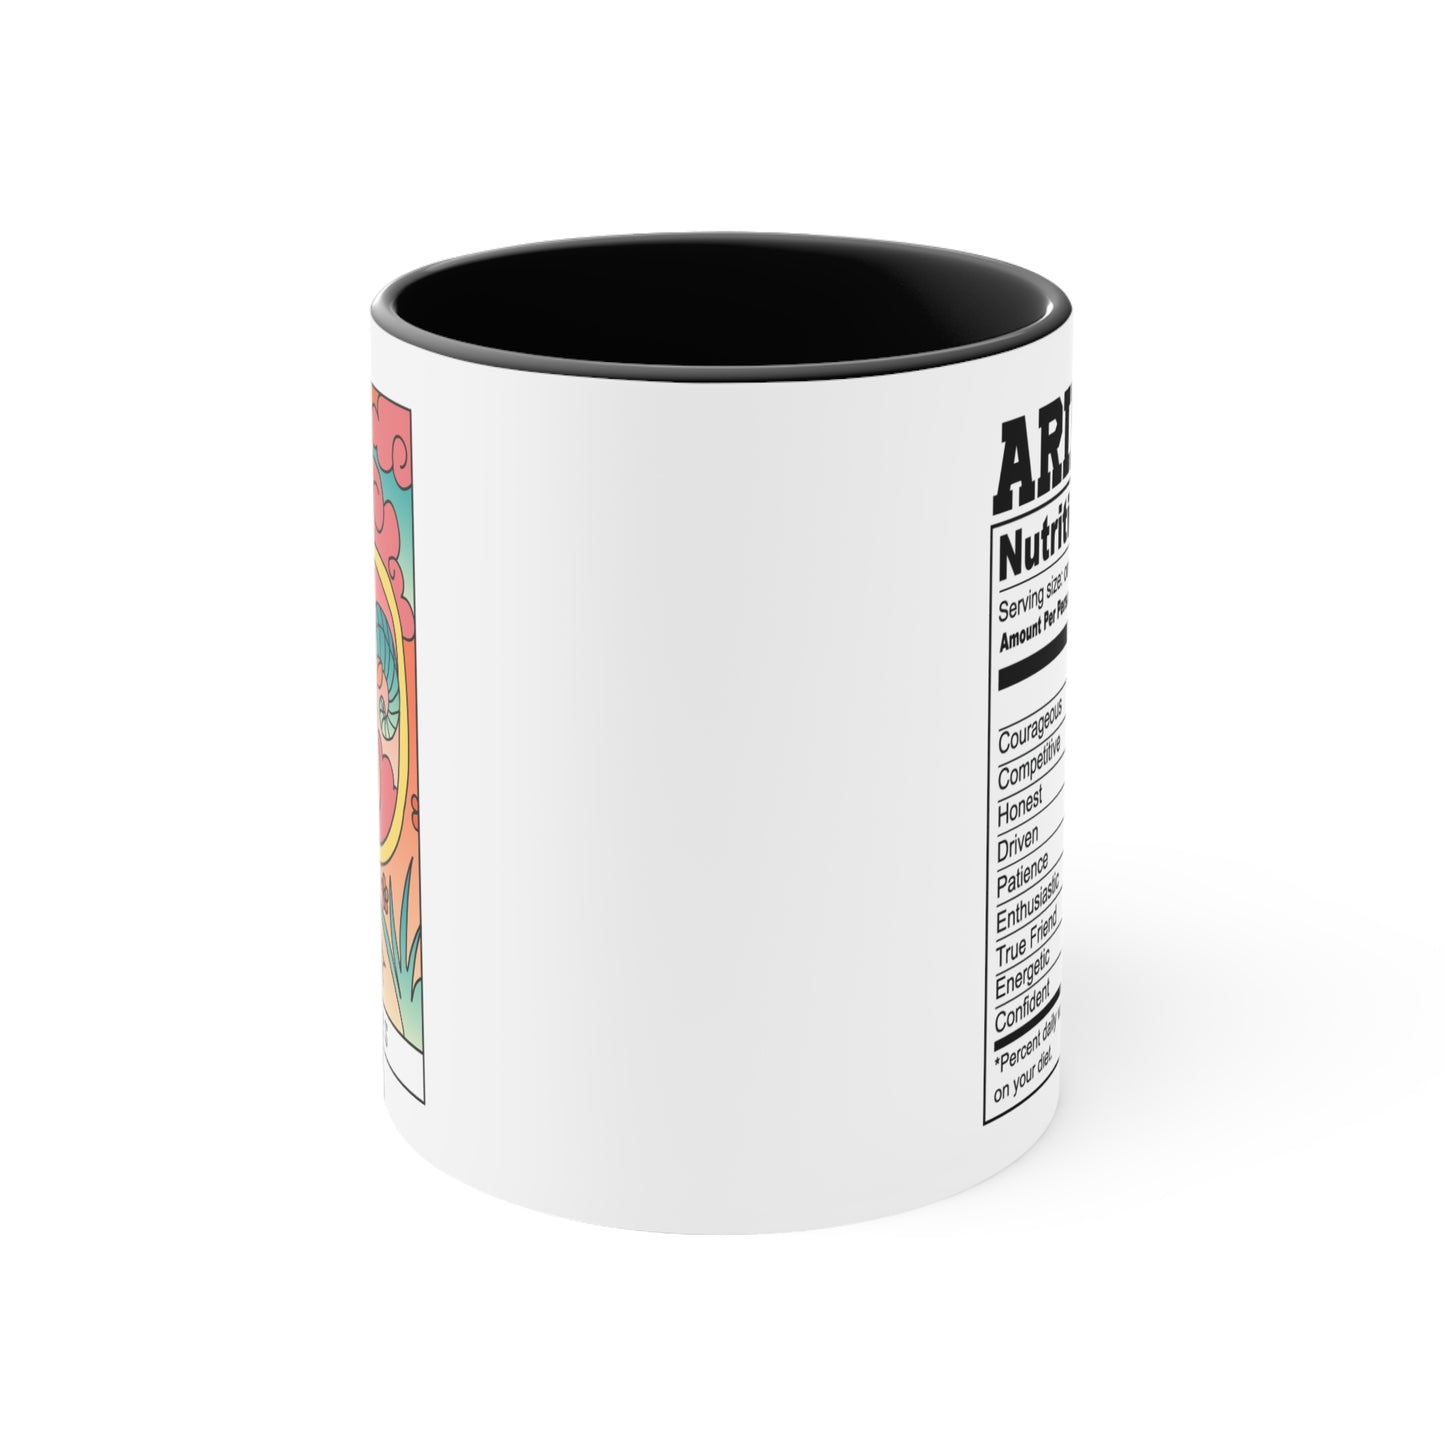 Aries Tarot Card Coffee Mug - Double Sided Black Accent Ceramic 11oz by TheGlassyLass.com